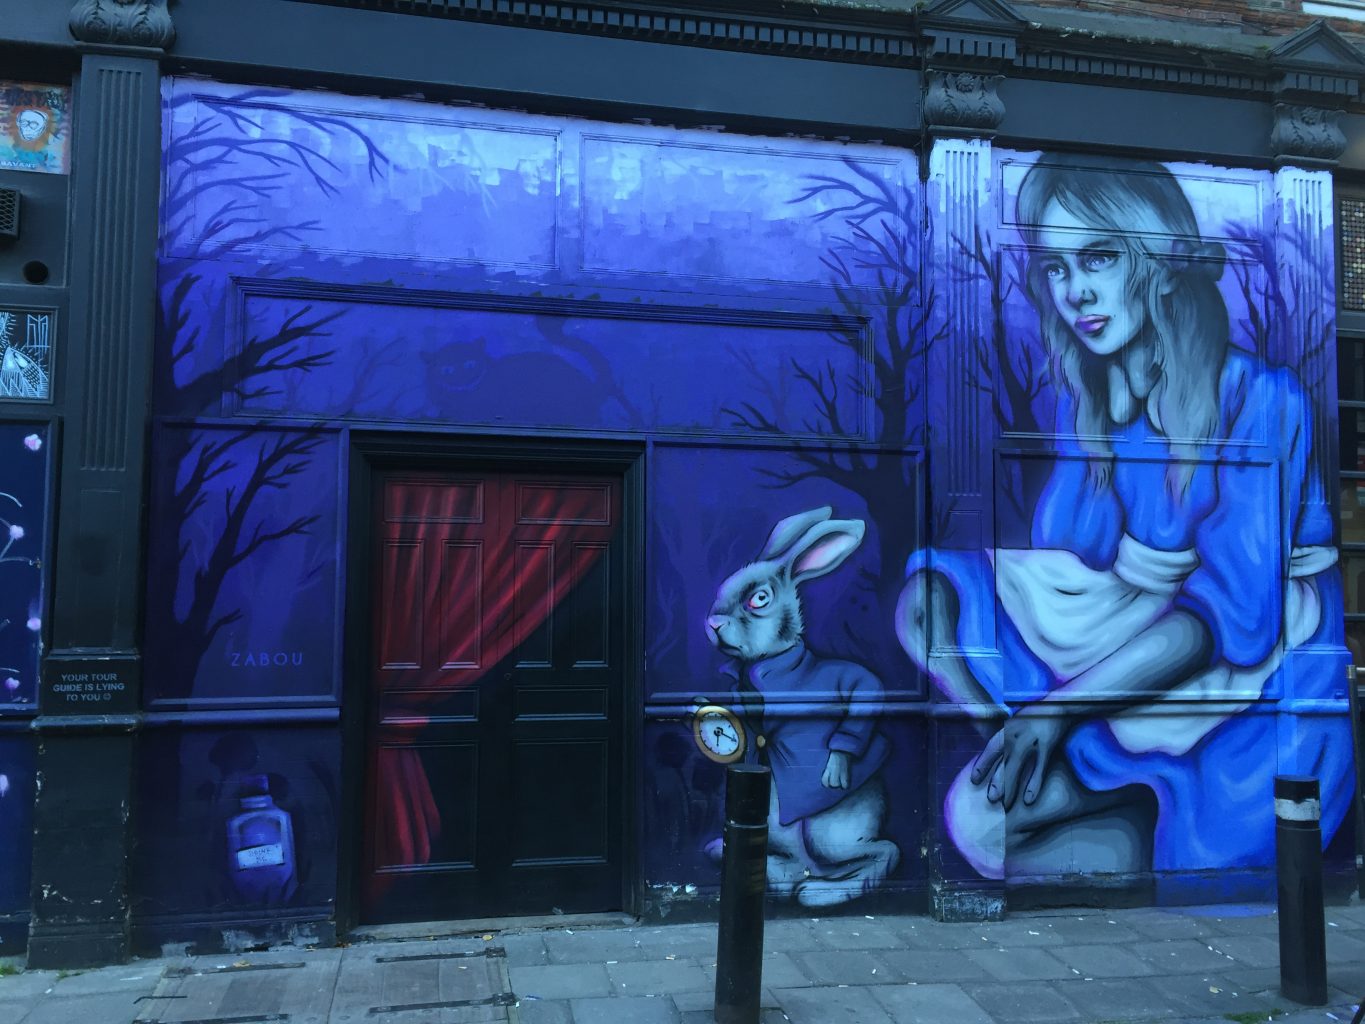 Wonderland. Los 4 mejores murales de Zabou en Londres